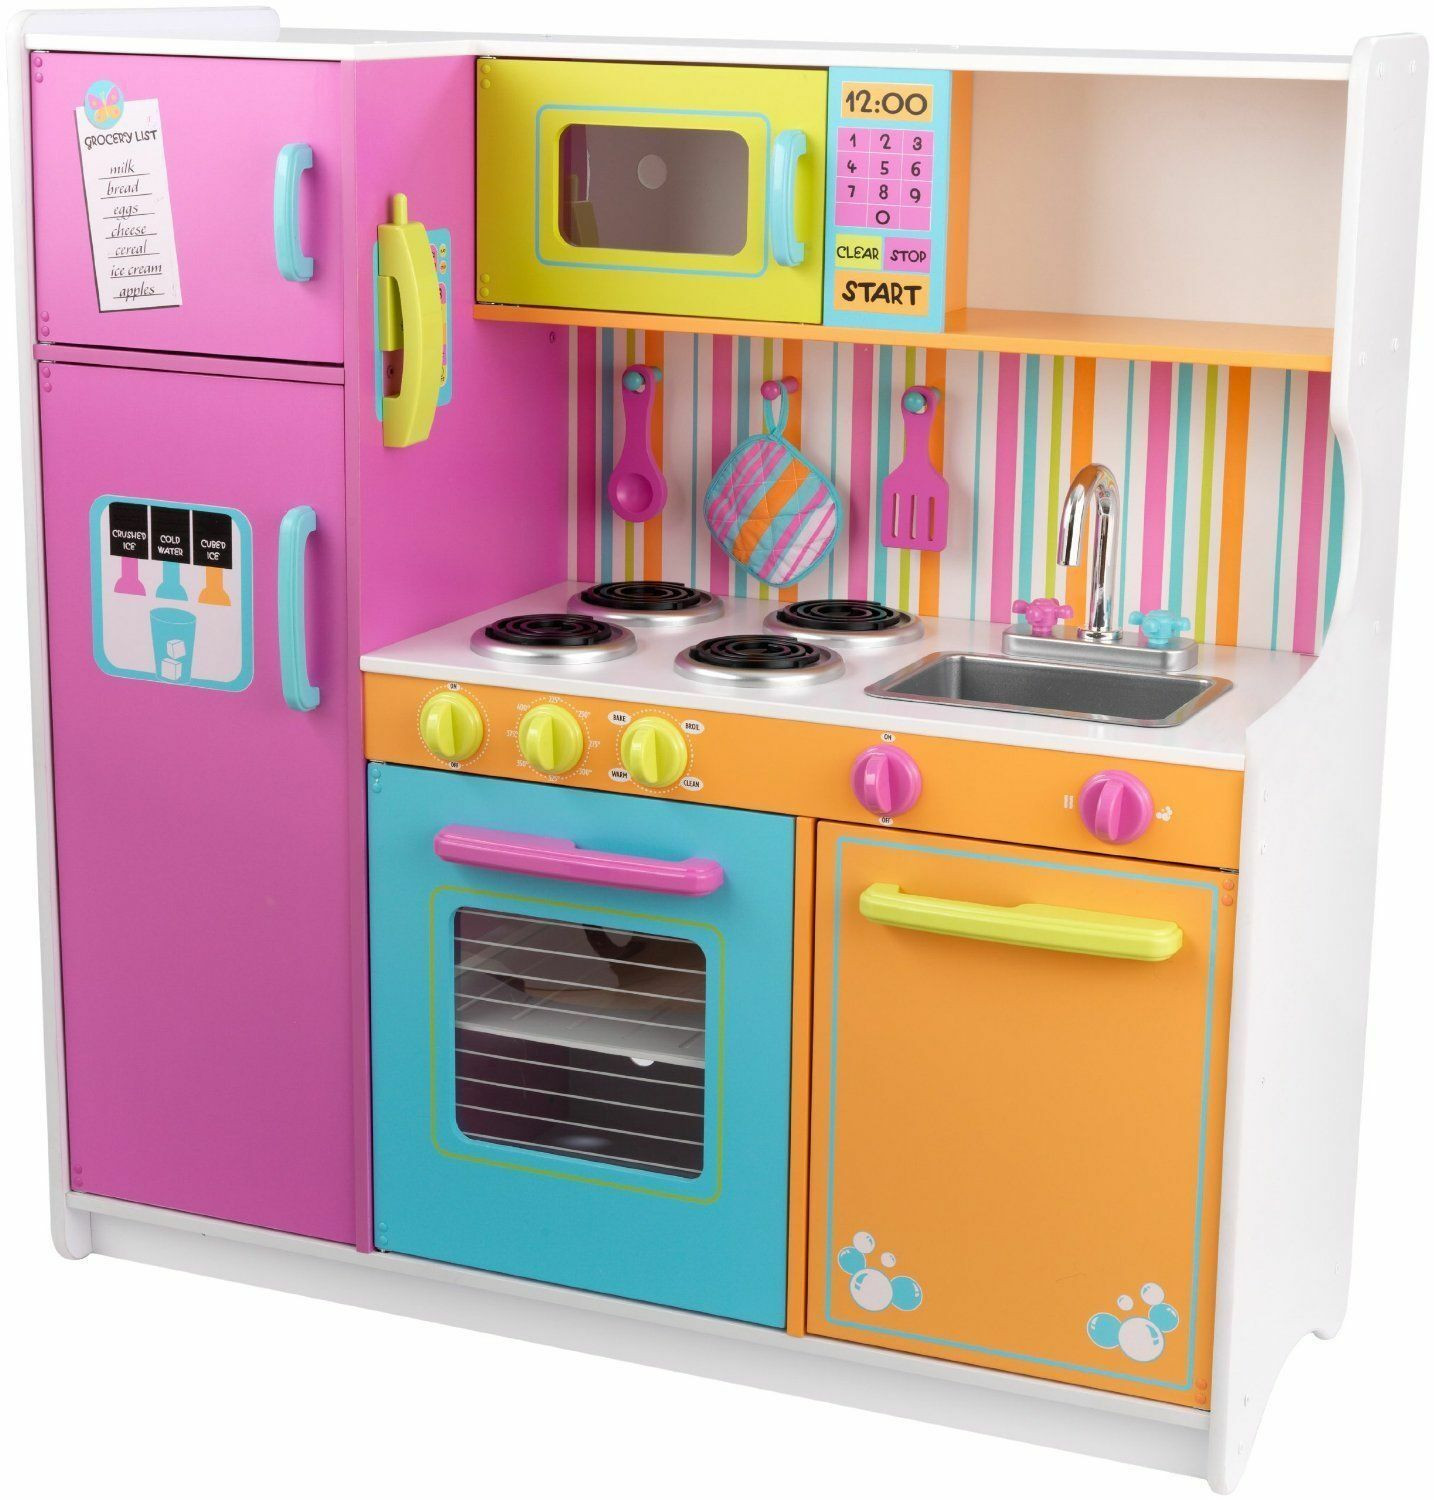 Kids Craft Kitchens
 Top 10 Wooden Kitchens for Kids